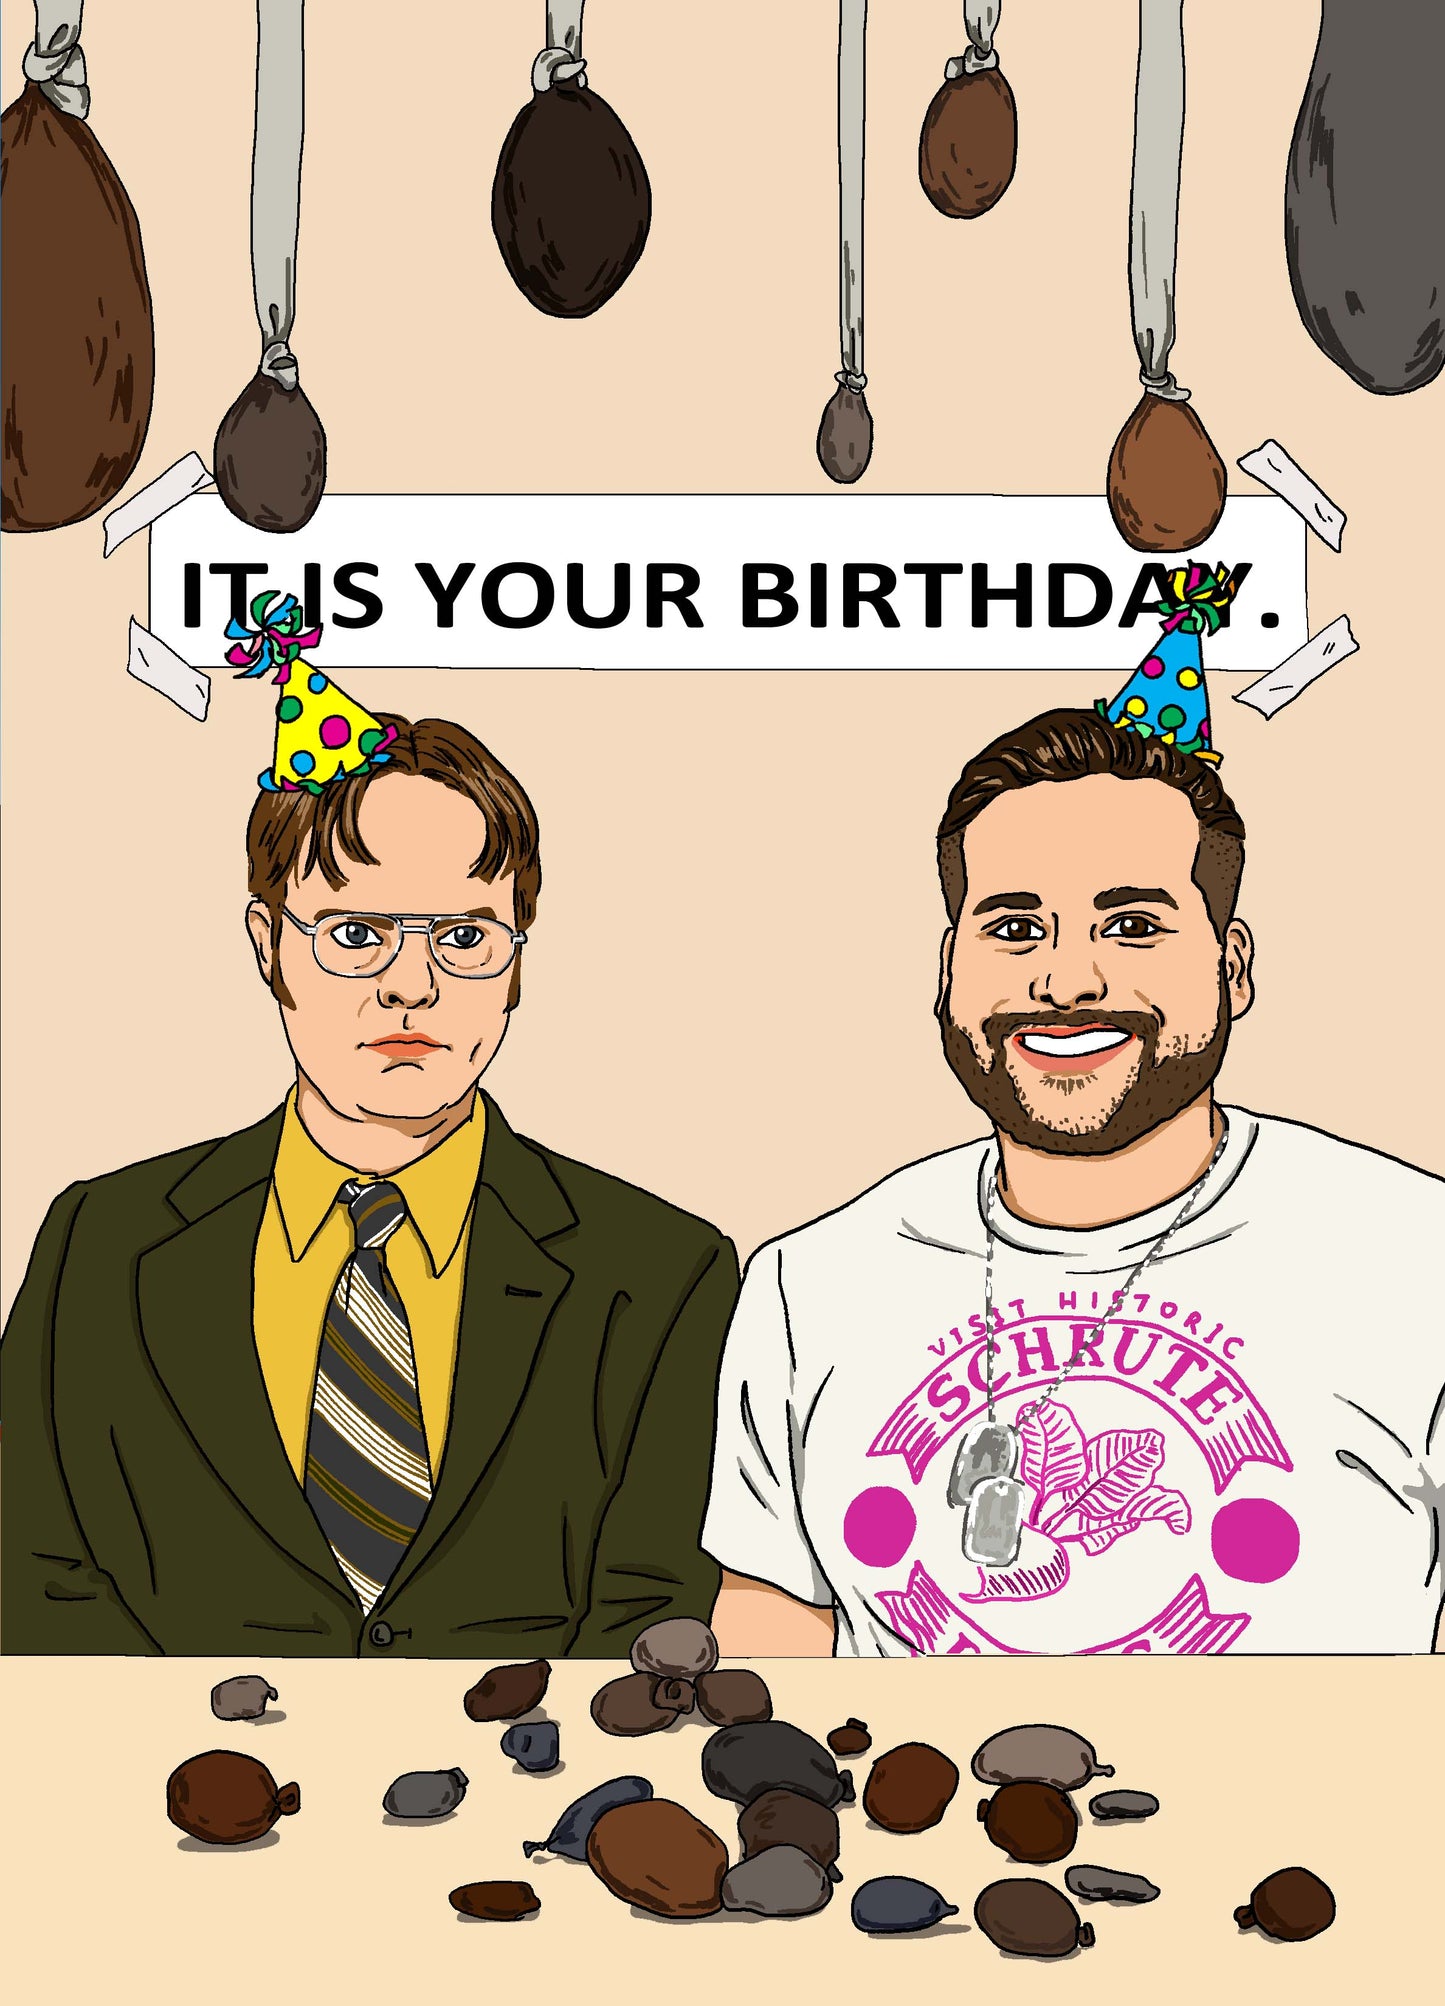 Custom The Office Birthday Card - Dwight Schrute